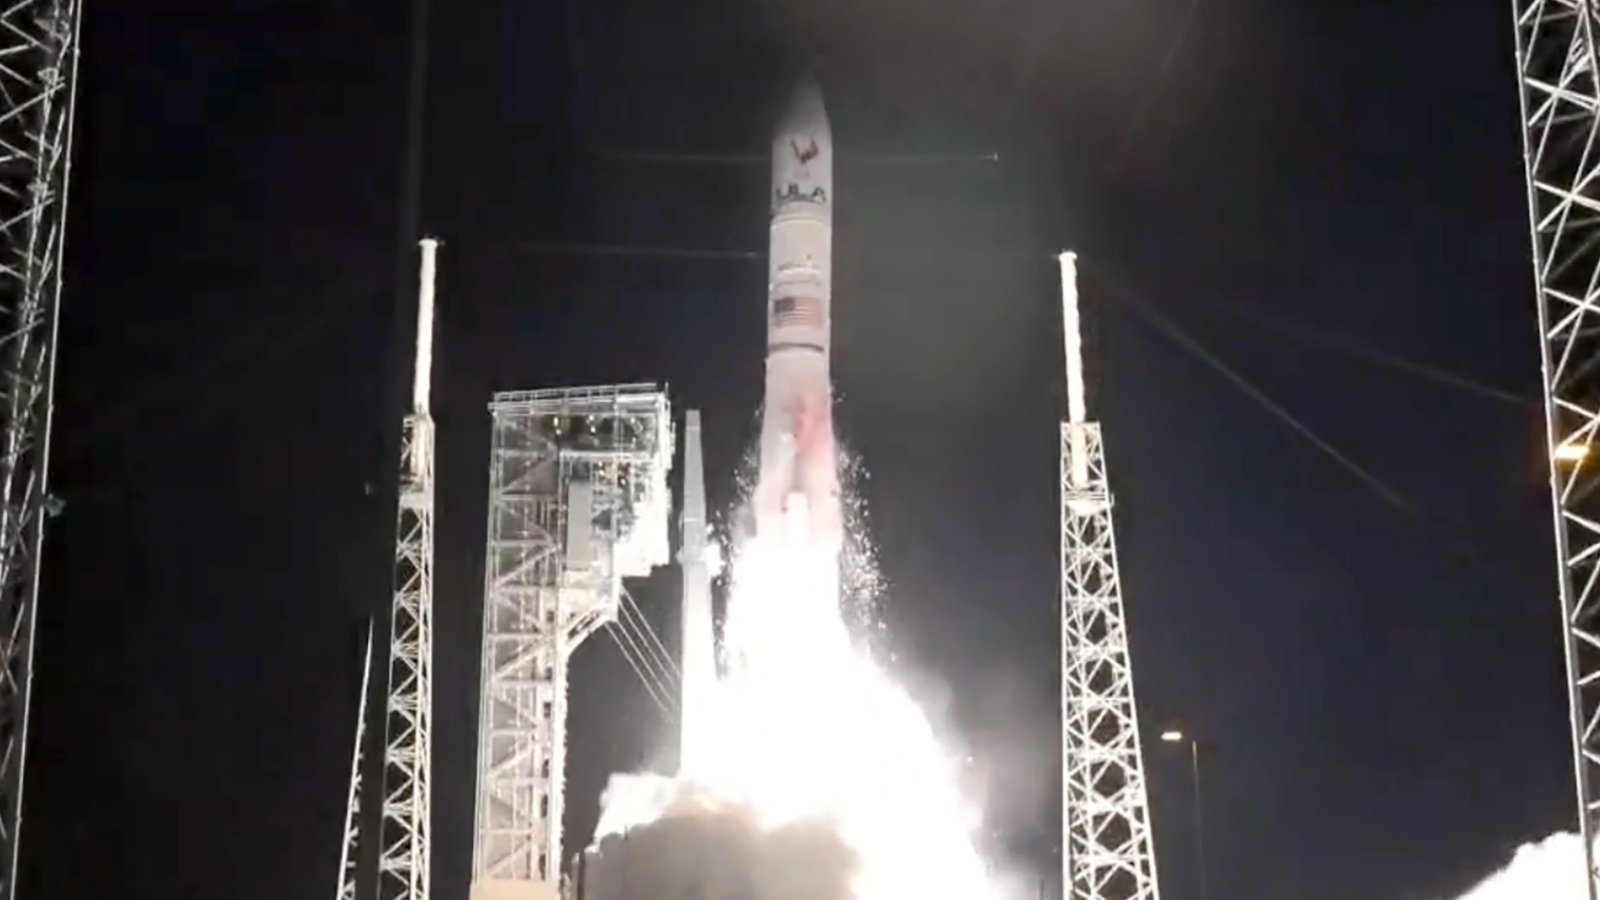 Vulcan Centaur rocket launching into space